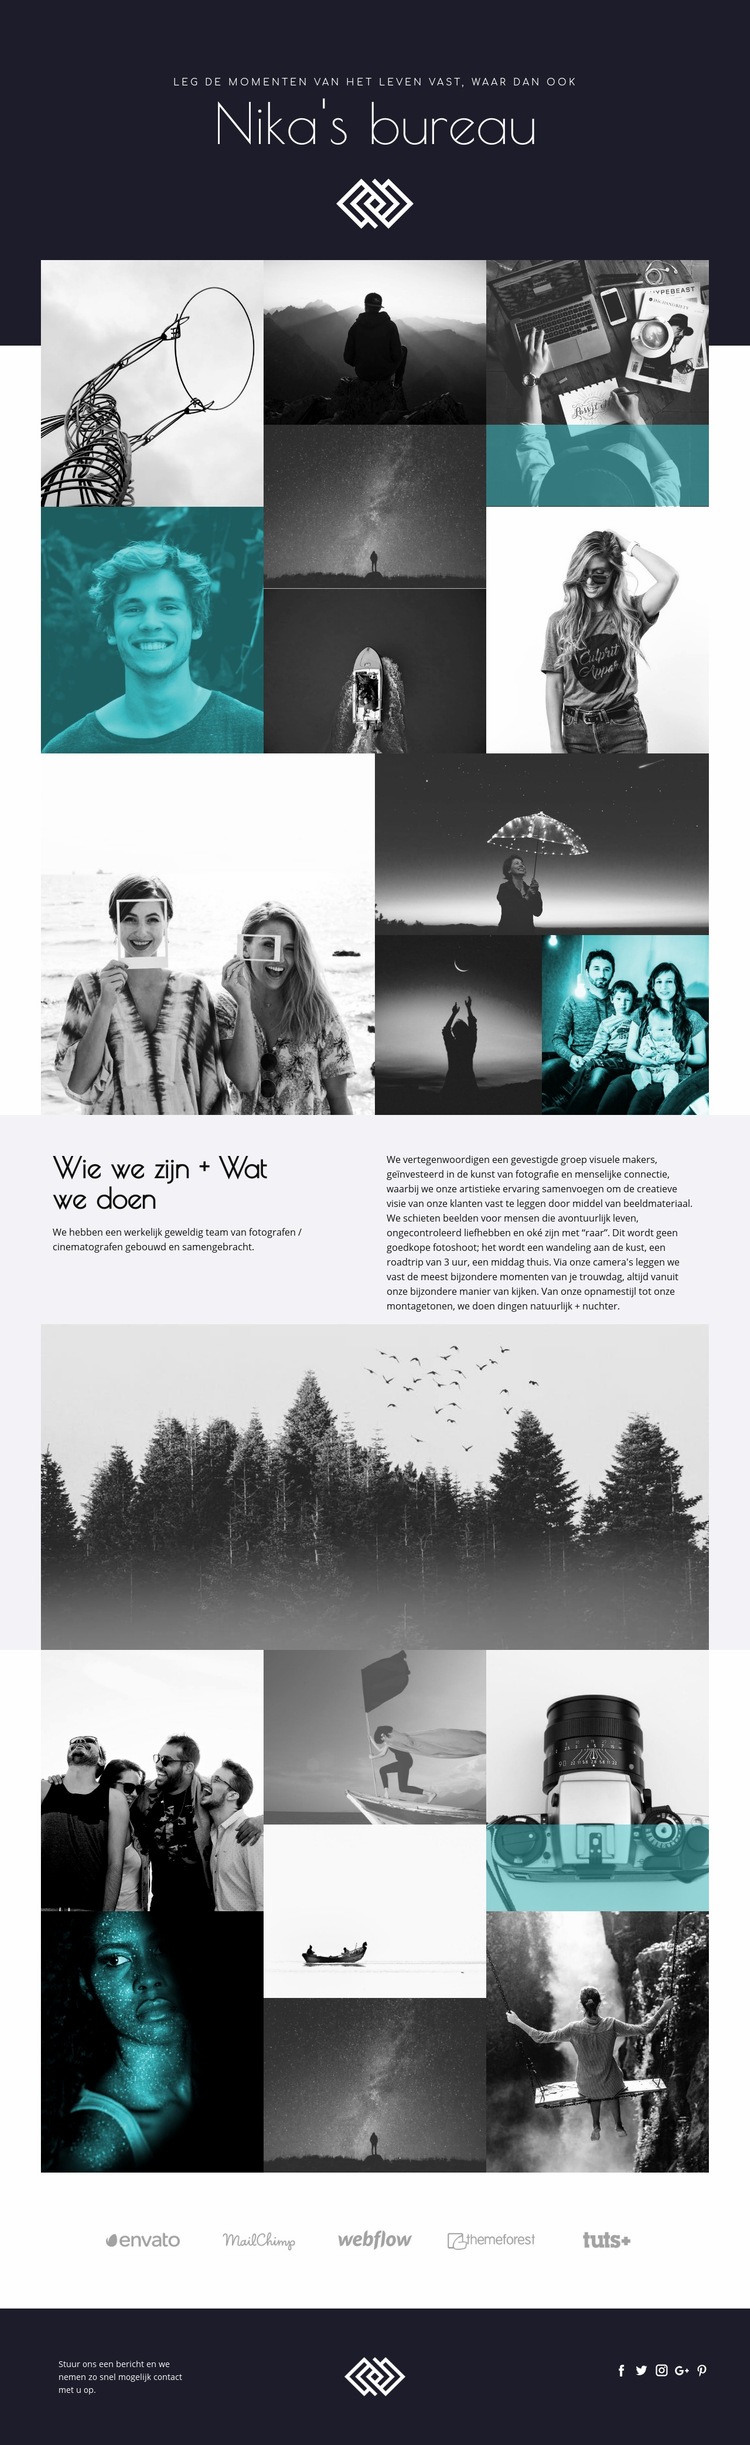 Nika's bureau Website ontwerp